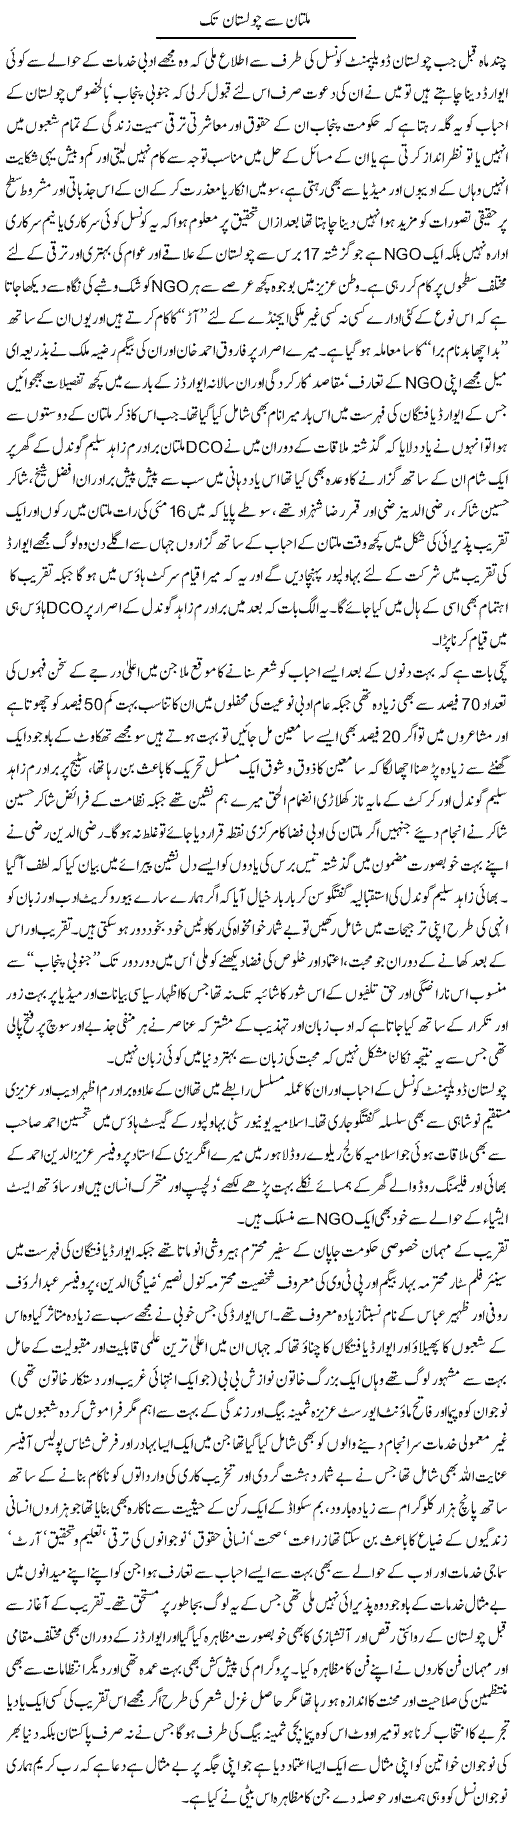 Multan Se Cholistan Tak | Amjad Islam Amjad | Daily Urdu Columns